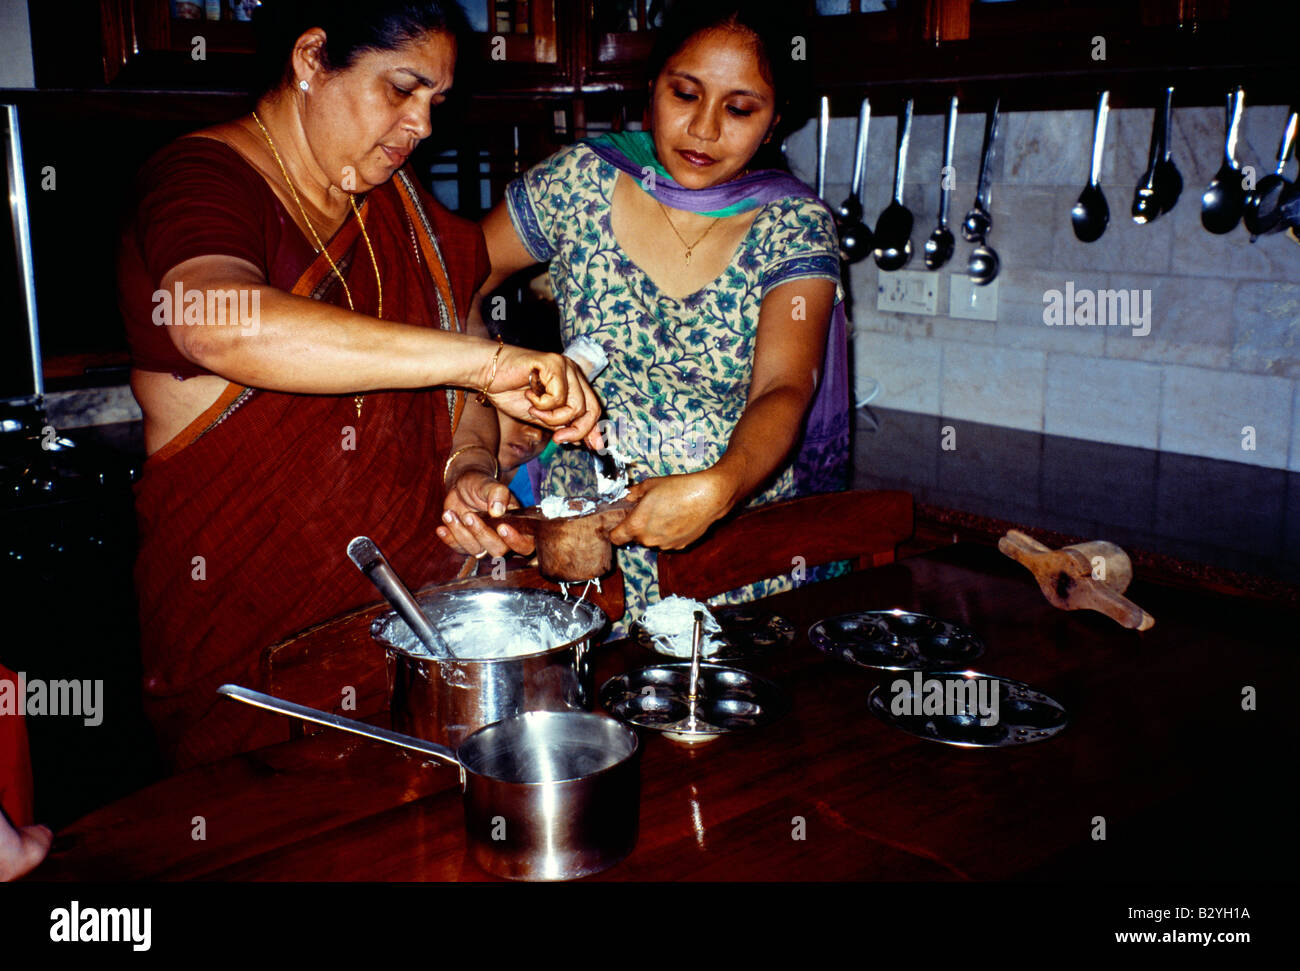 Pallivathukal Kerala India Philipkutty’s Fram Professional Woman Teaching People To Cook Stock Photo